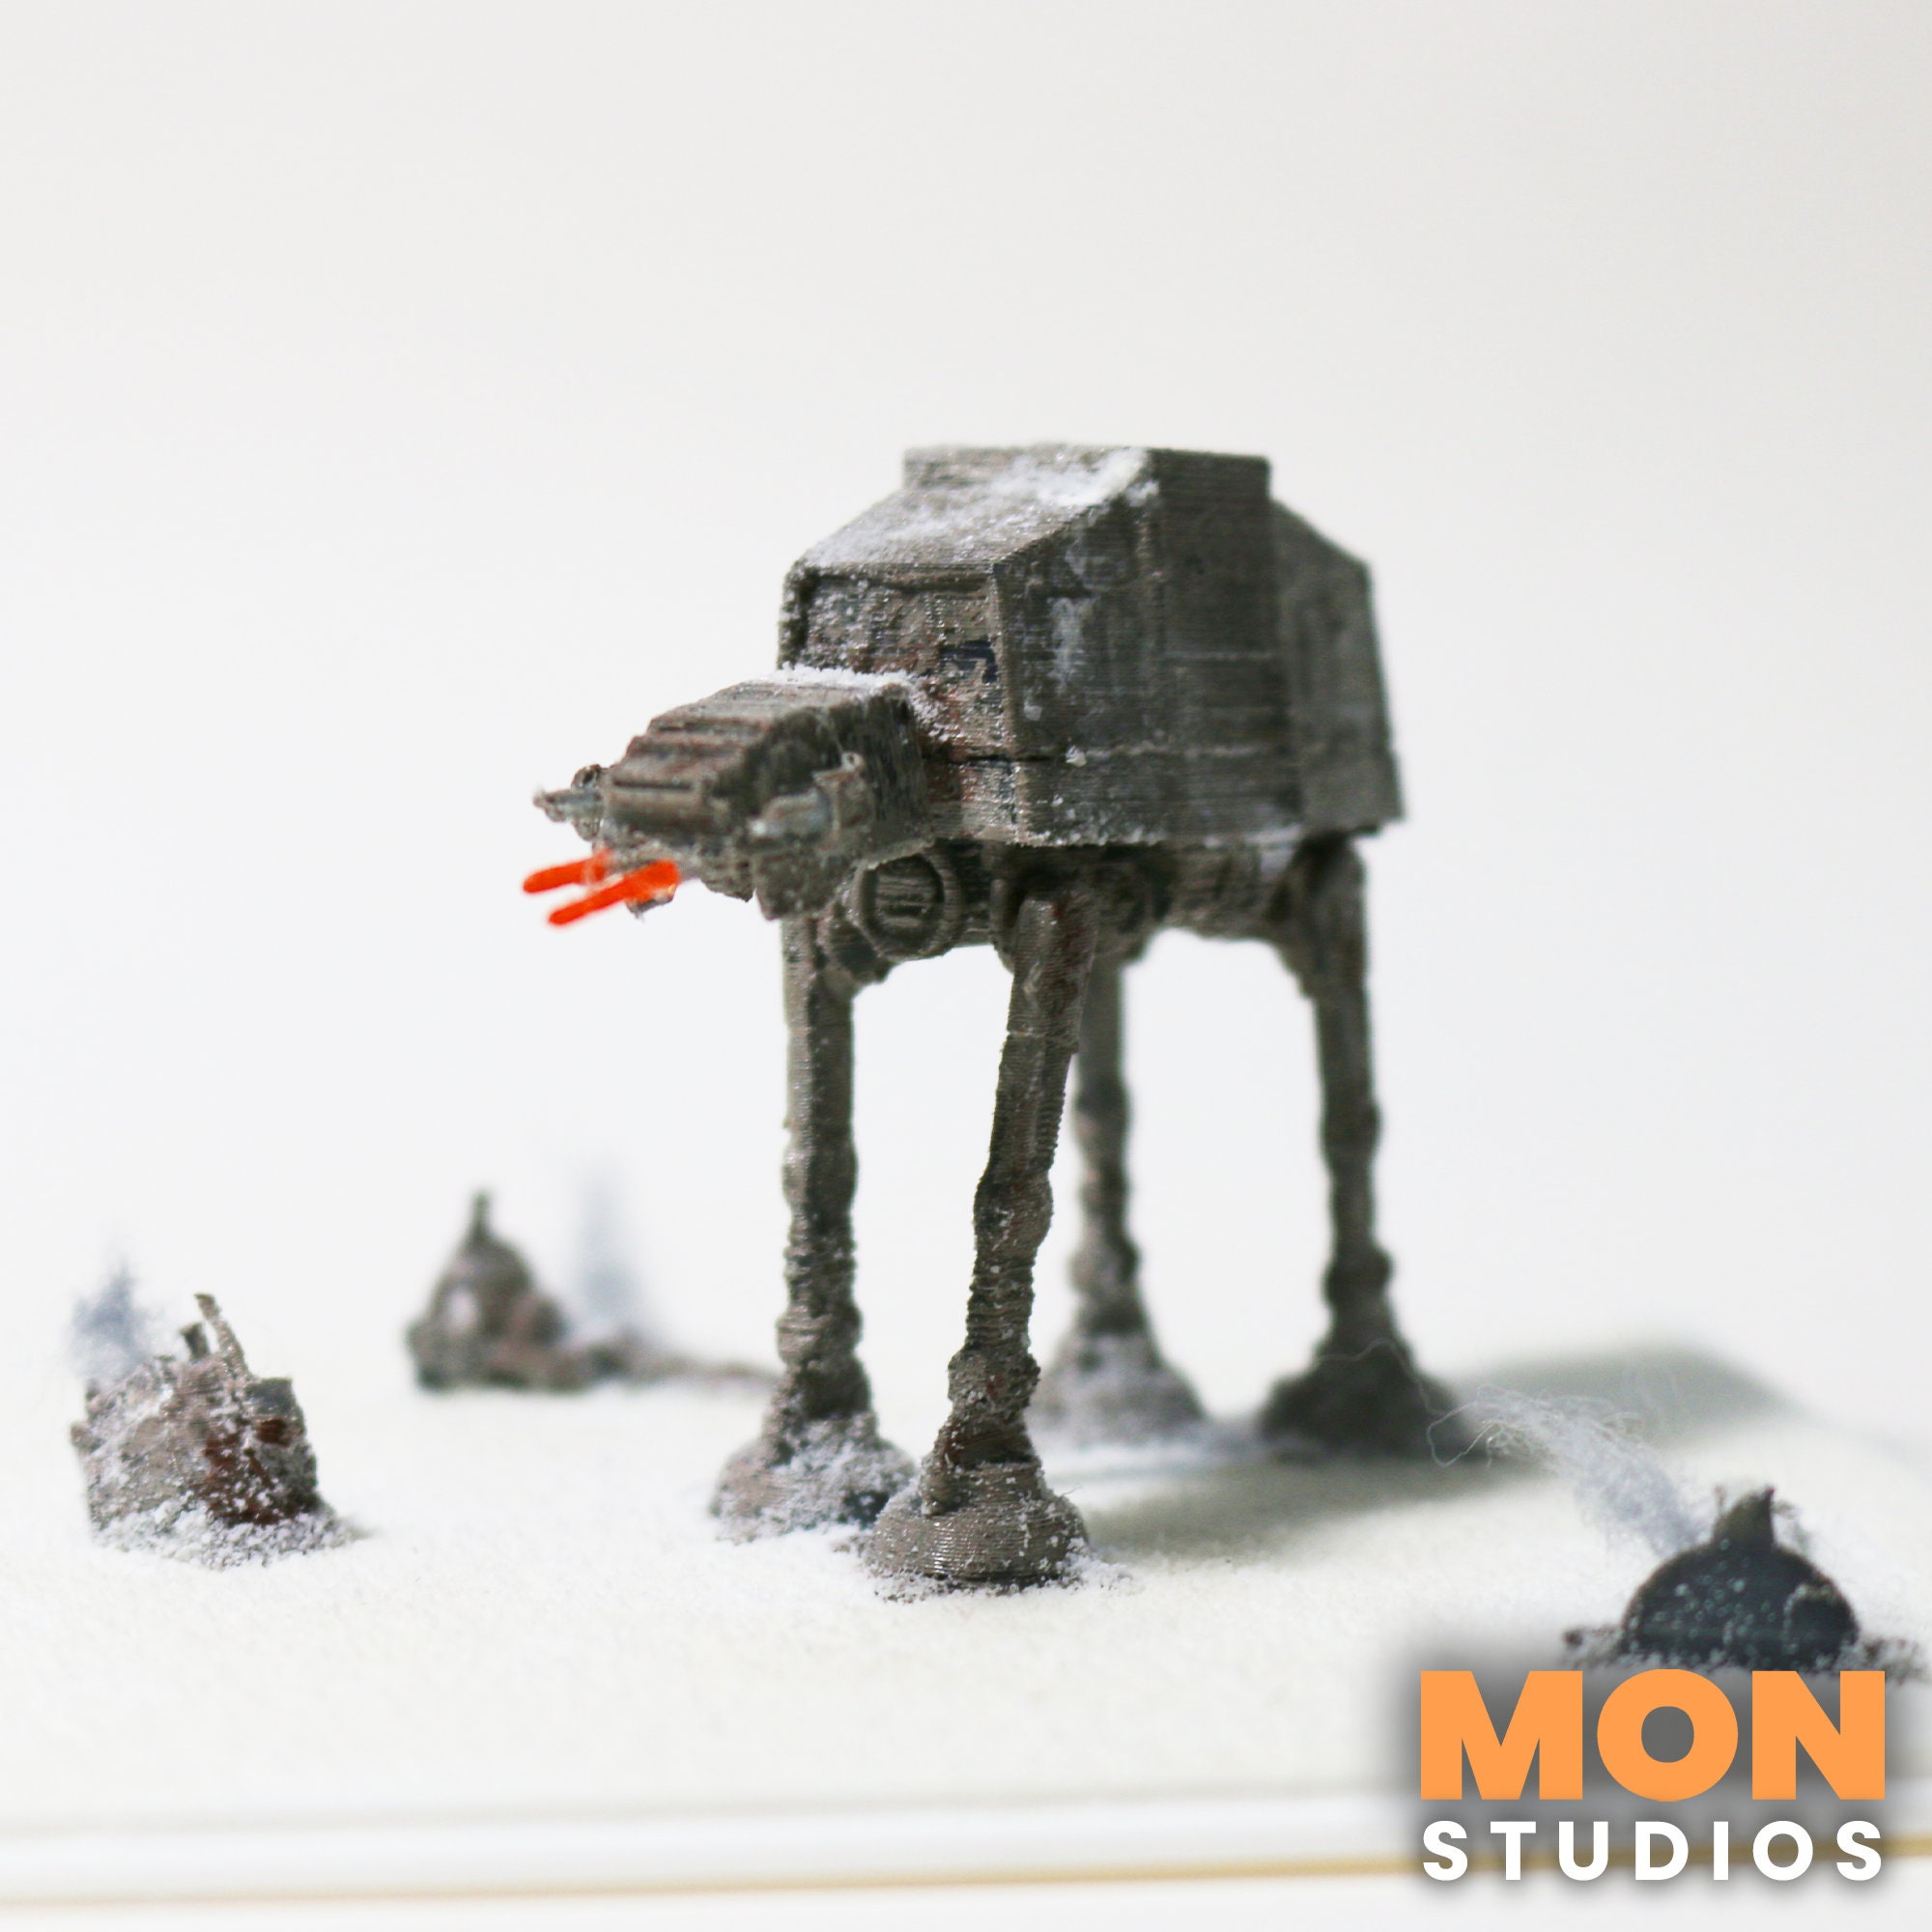 LEGO Star Wars Diorama Moc assault on Hoth DIGITAL INSTRUCTIONS -   Sweden